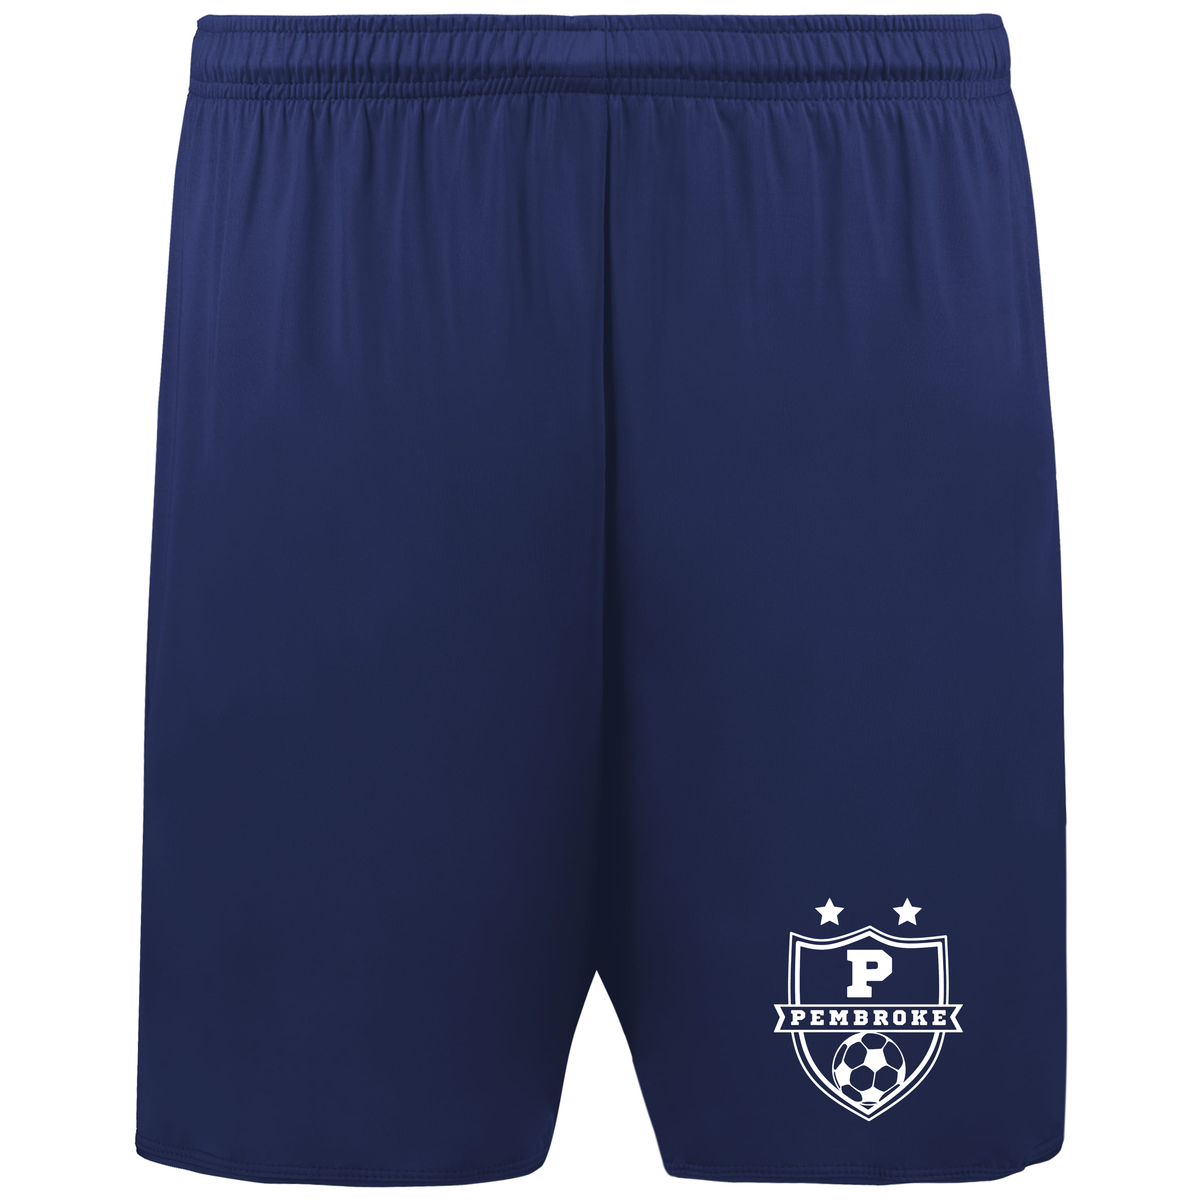 Pembroke Soccer Play90 Coolcore Soccer Shorts